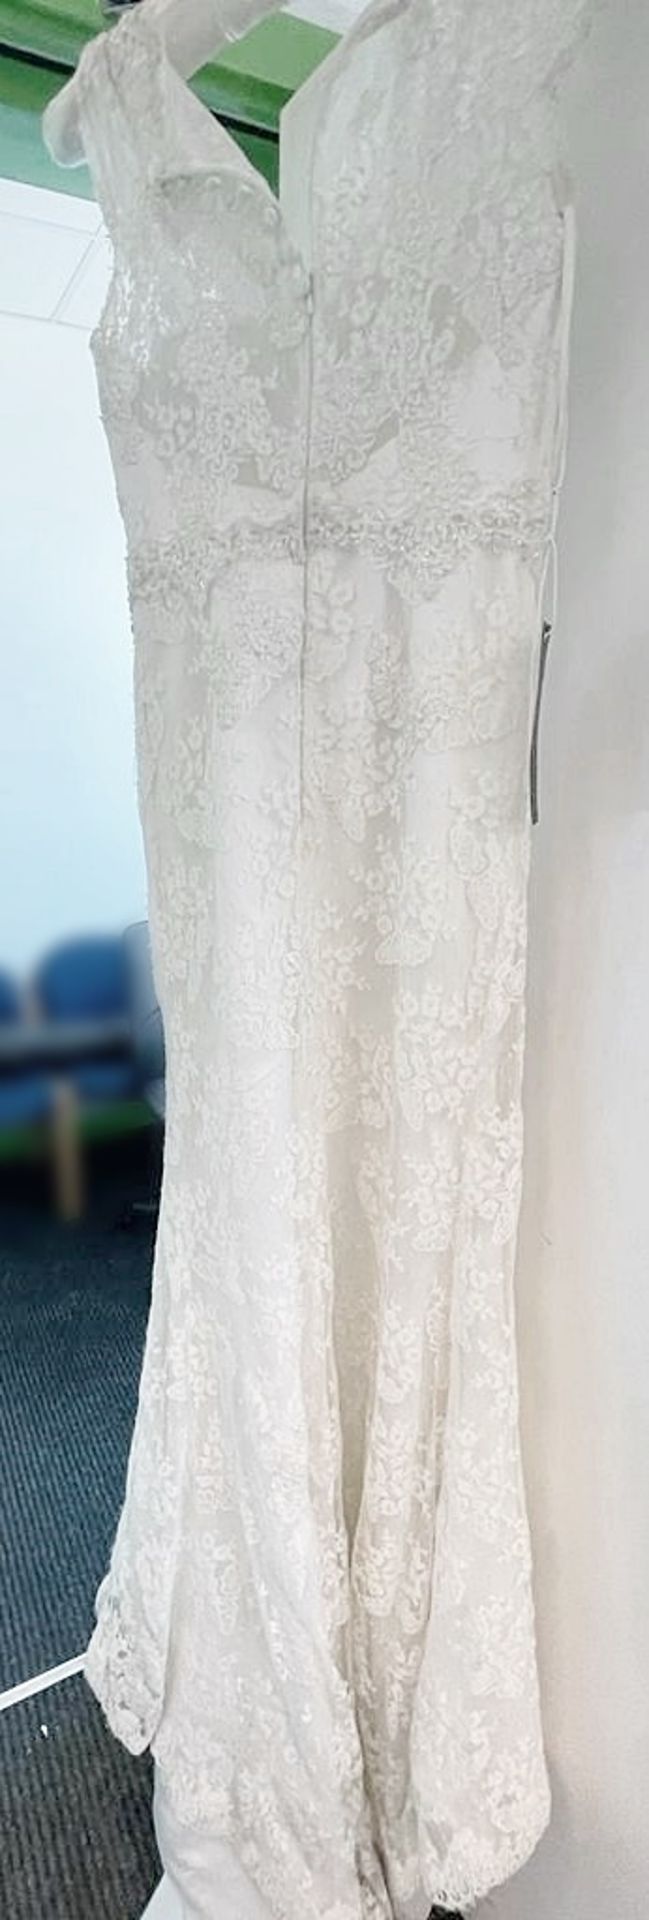 1 x LUSAN MANDONGUS 'Jamie' Designer Chantilly Lace Wedding Dress Bridal Gown, With Satin - Image 6 of 13